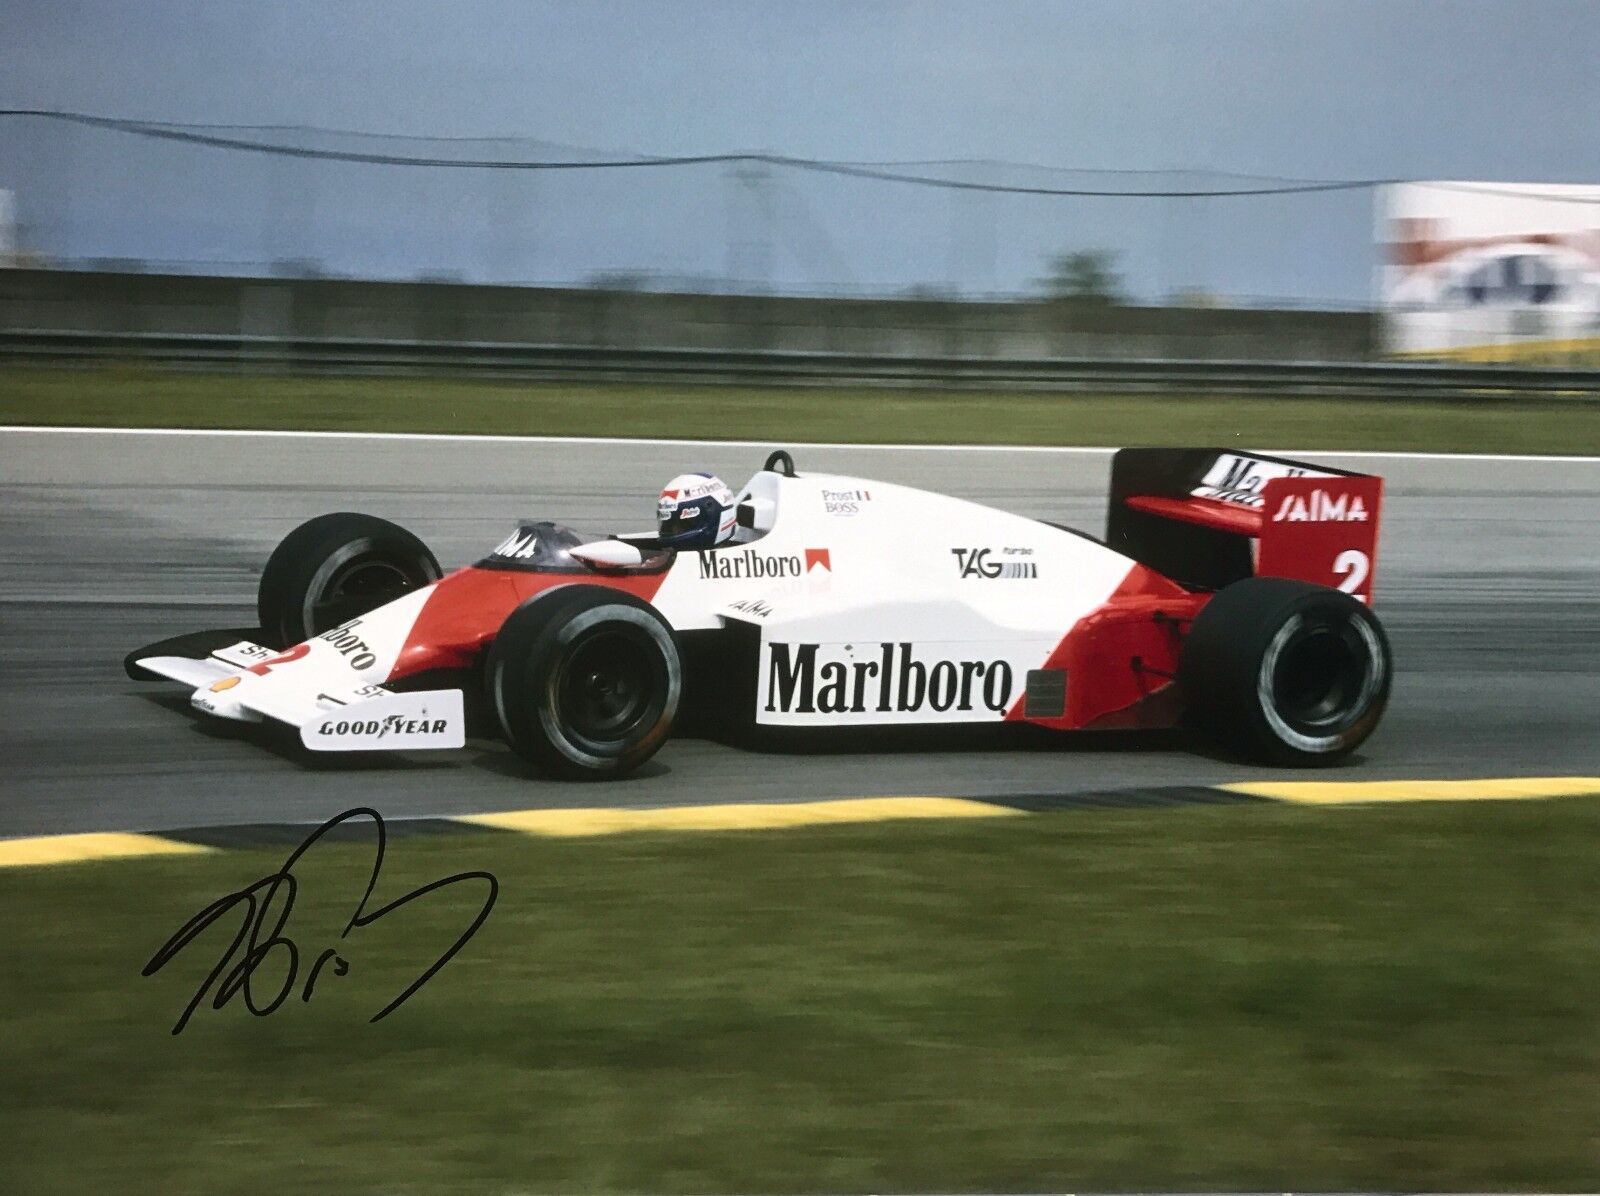 Alain Prost Hand Signed Marlboro McLaren F1 16x12 Photo Poster painting 7.